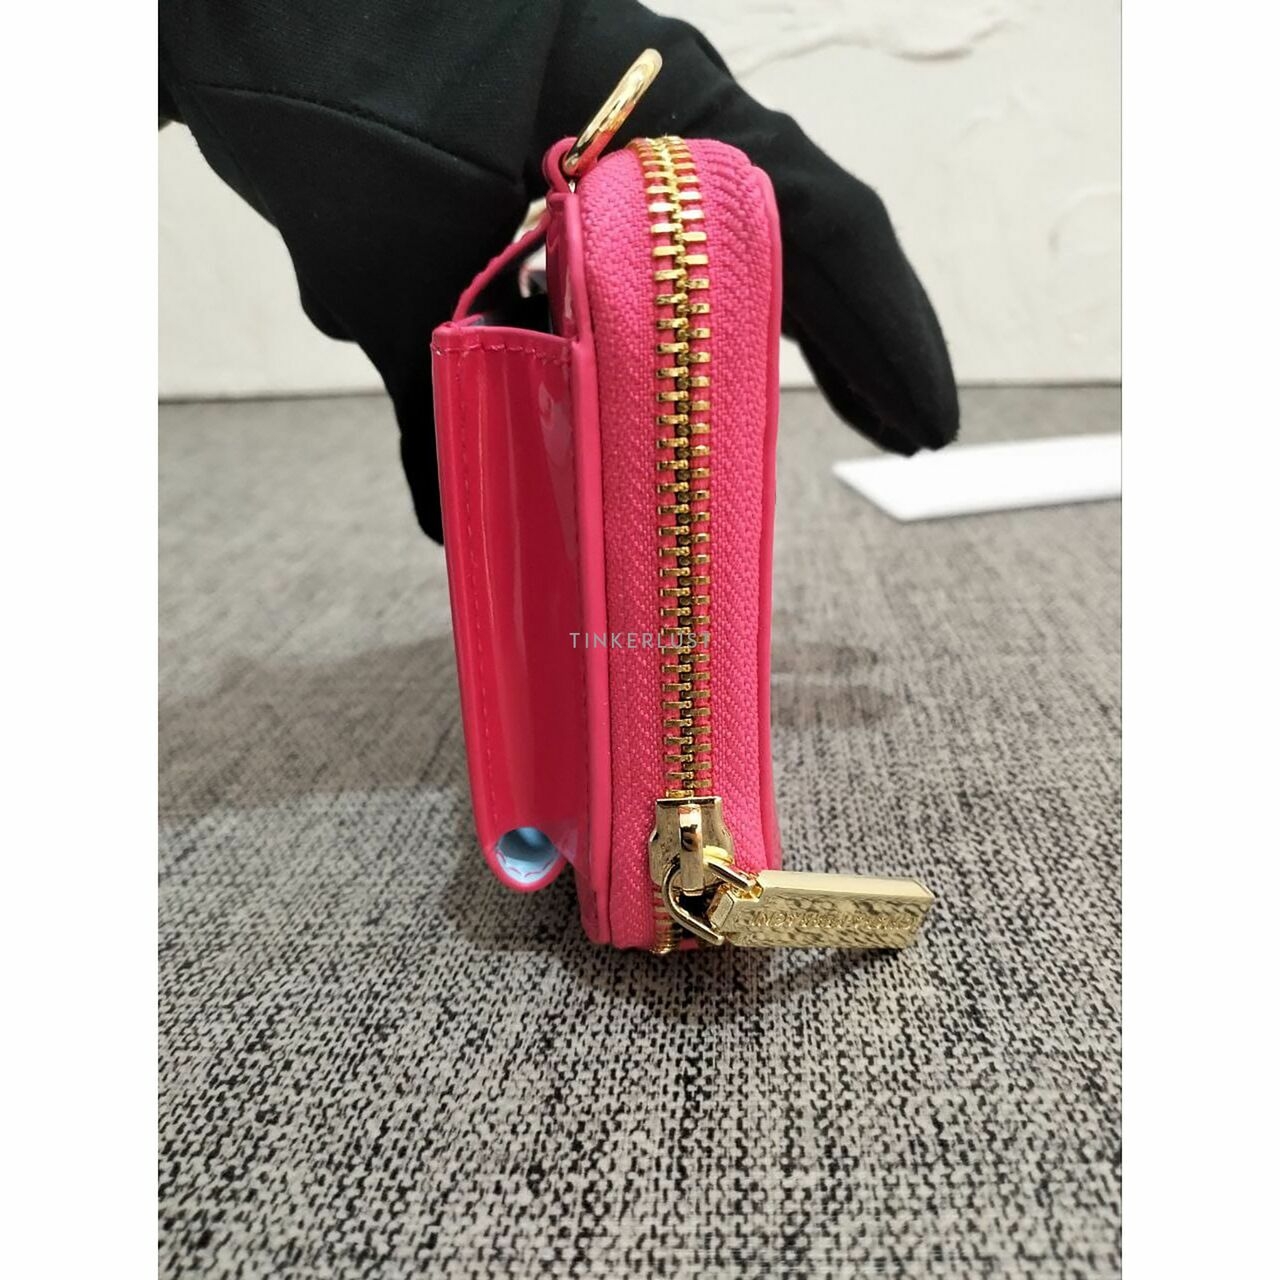 Chiara Ferragni Zipper Wallet On Chain WOC Eye Star in Shocking Pink, inside Soft Blue Sling Bag